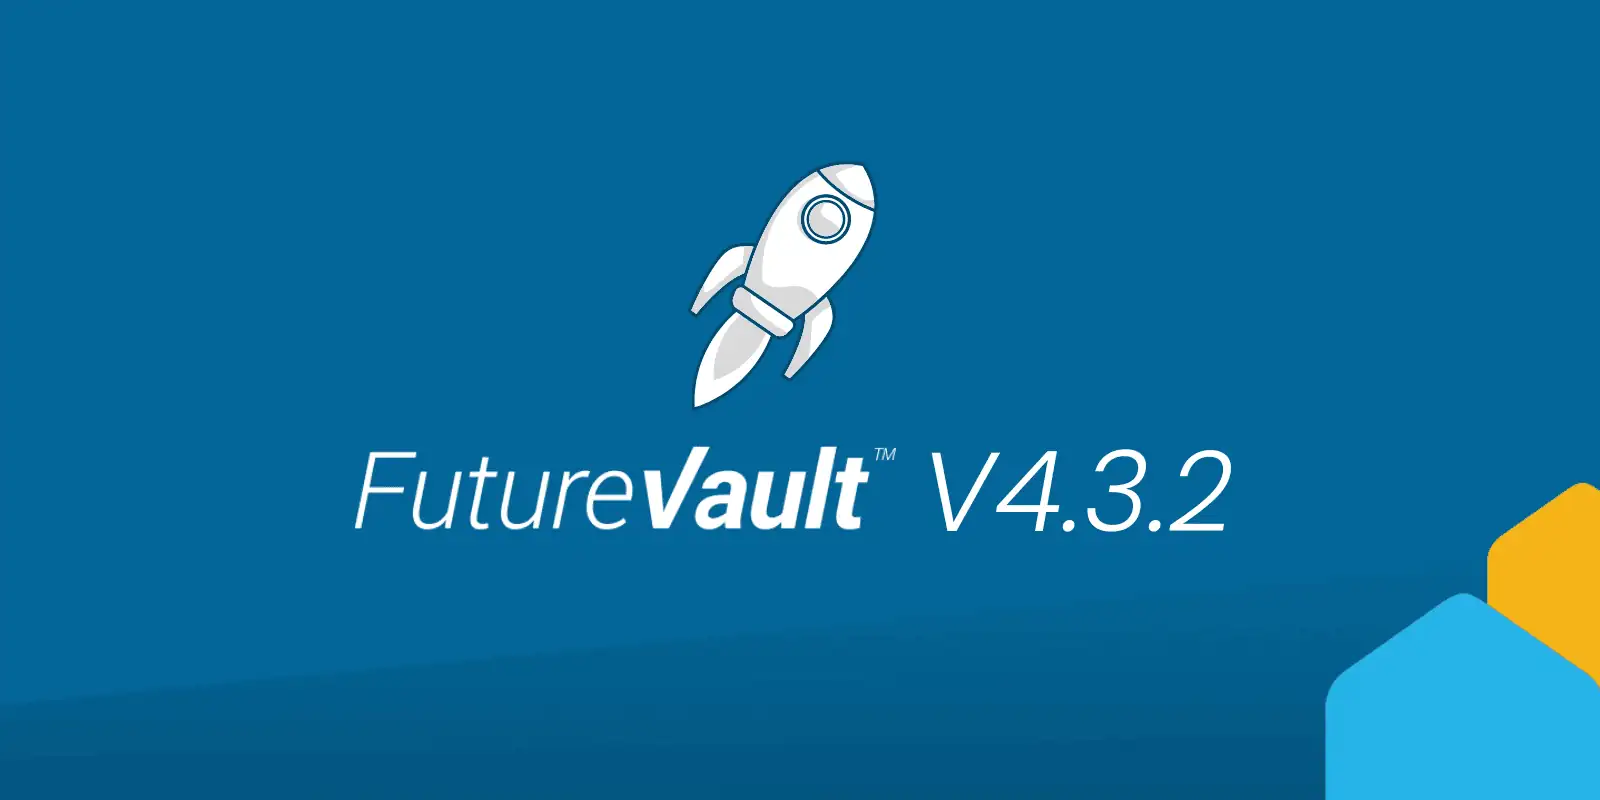 Platform Updates and Enhancements - FutureVault V4.3.2